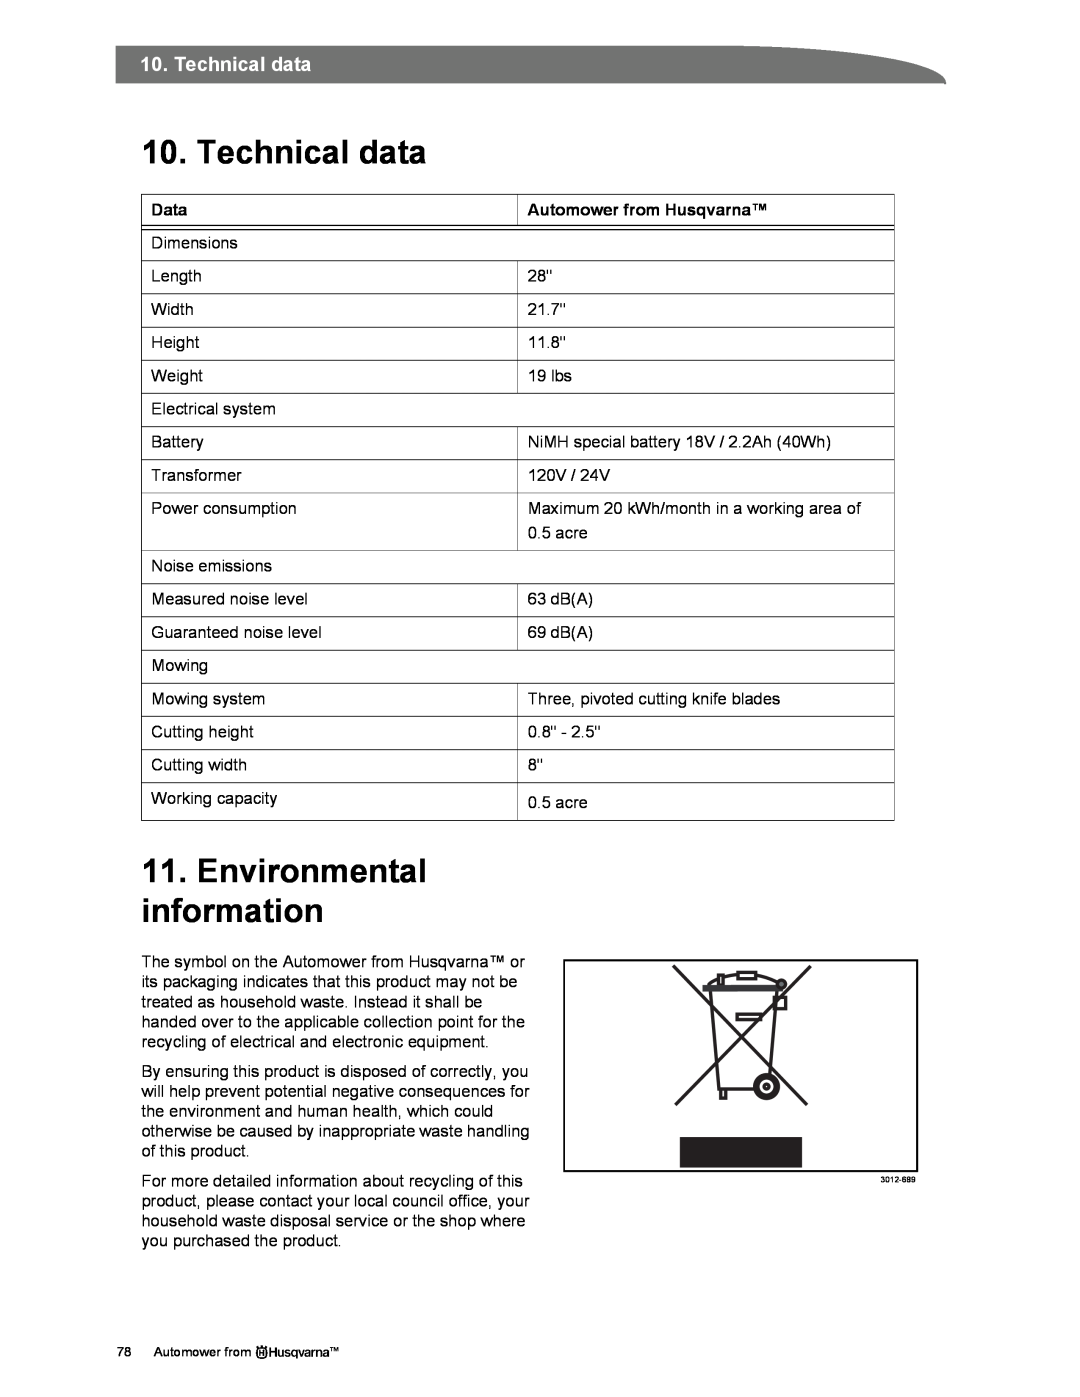 Husqvarna manual Technical data, Environmental, information, Data, Automower from Husqvarna 